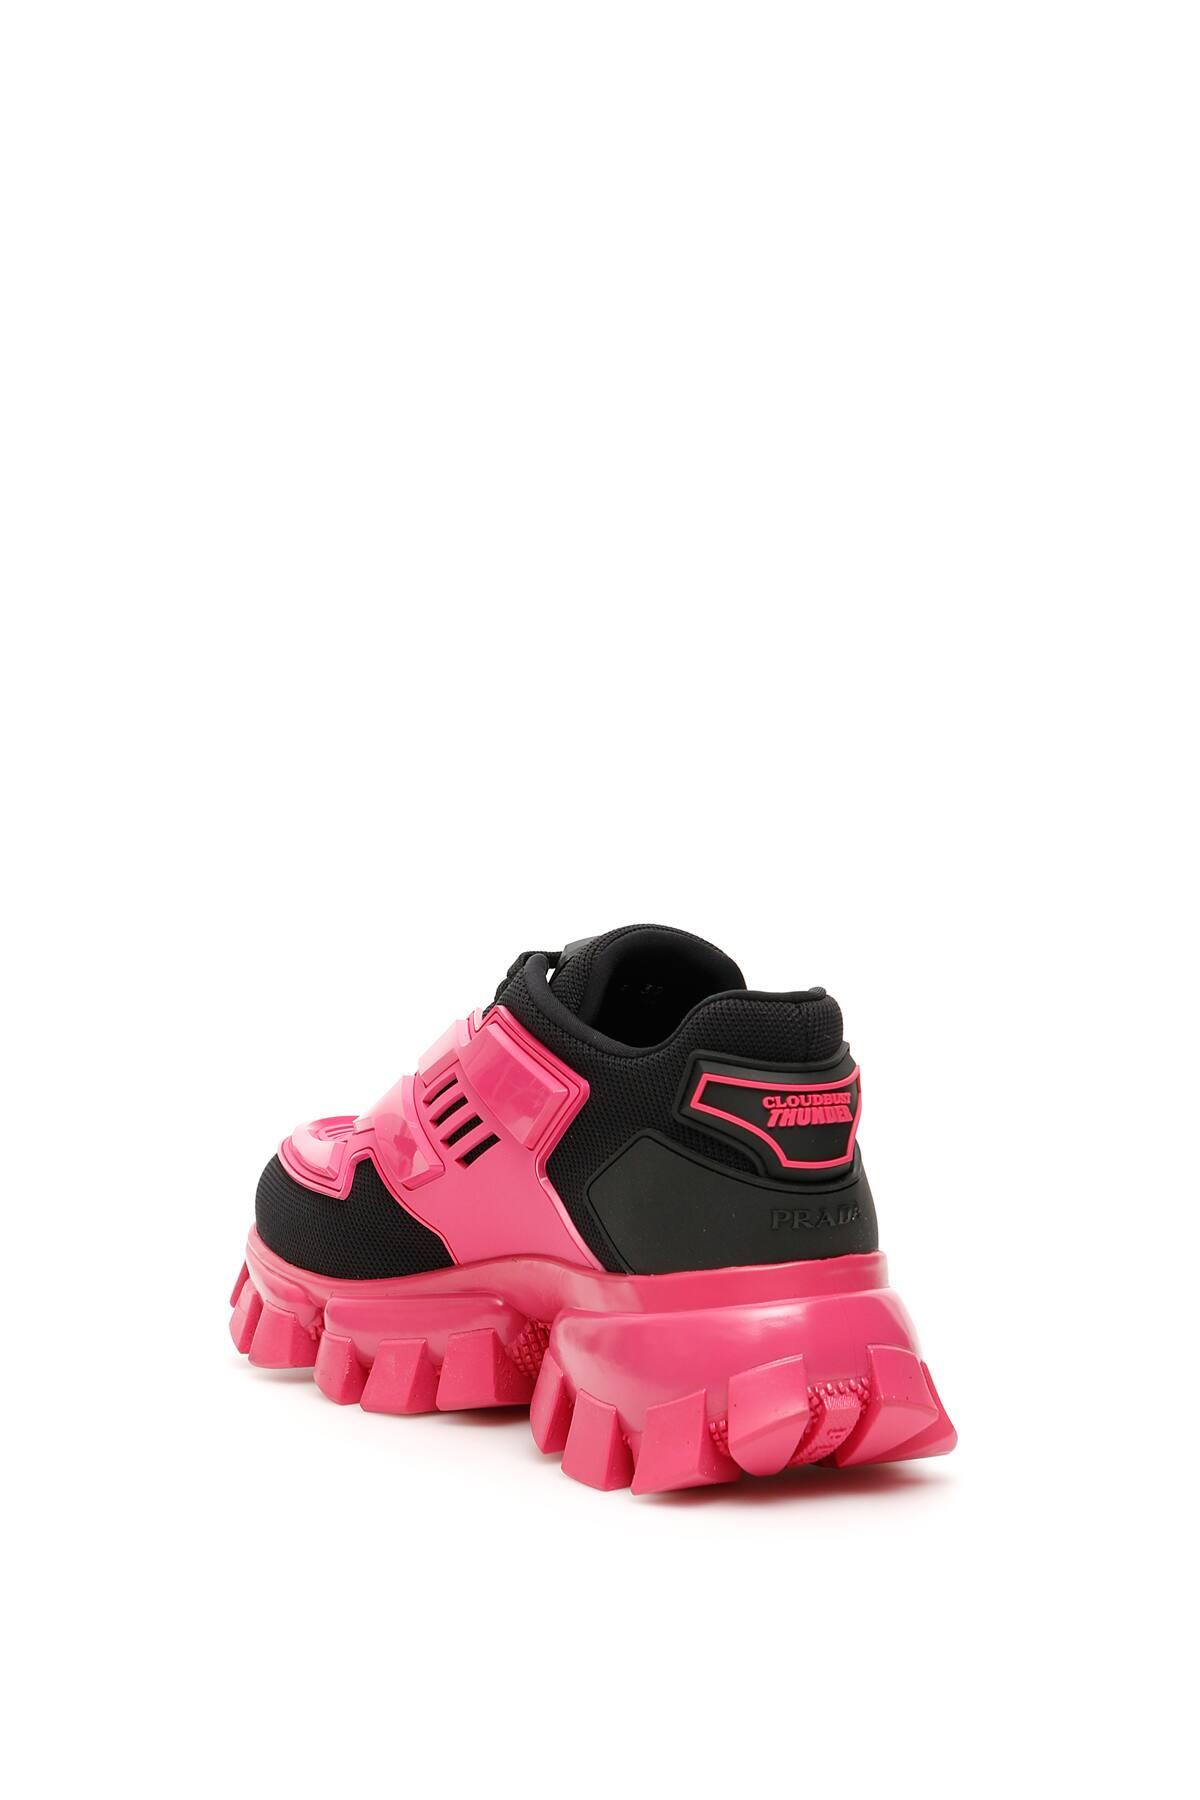 pink prada shoes Off 79% - www.loverethymno.com